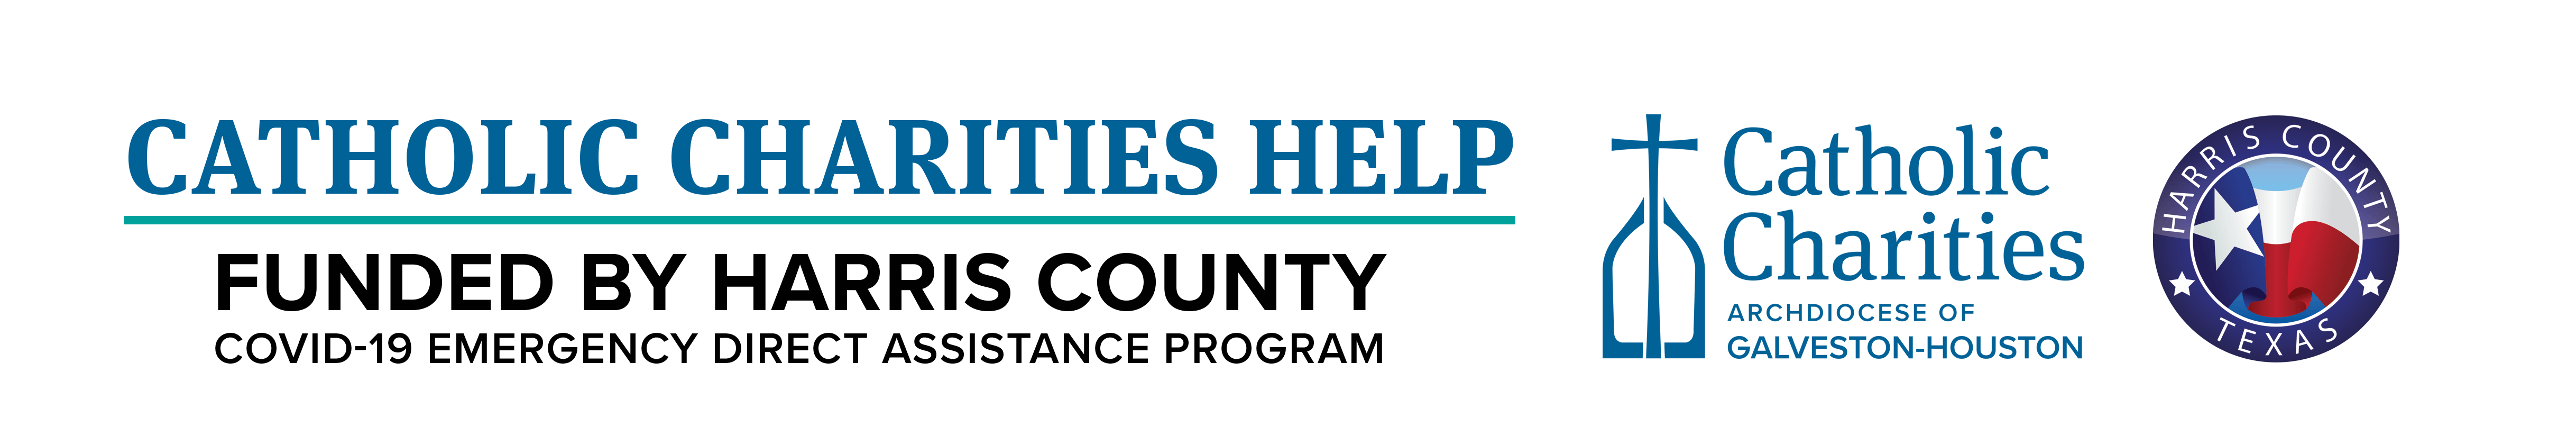 Catholic Charities Help Harris County Fund